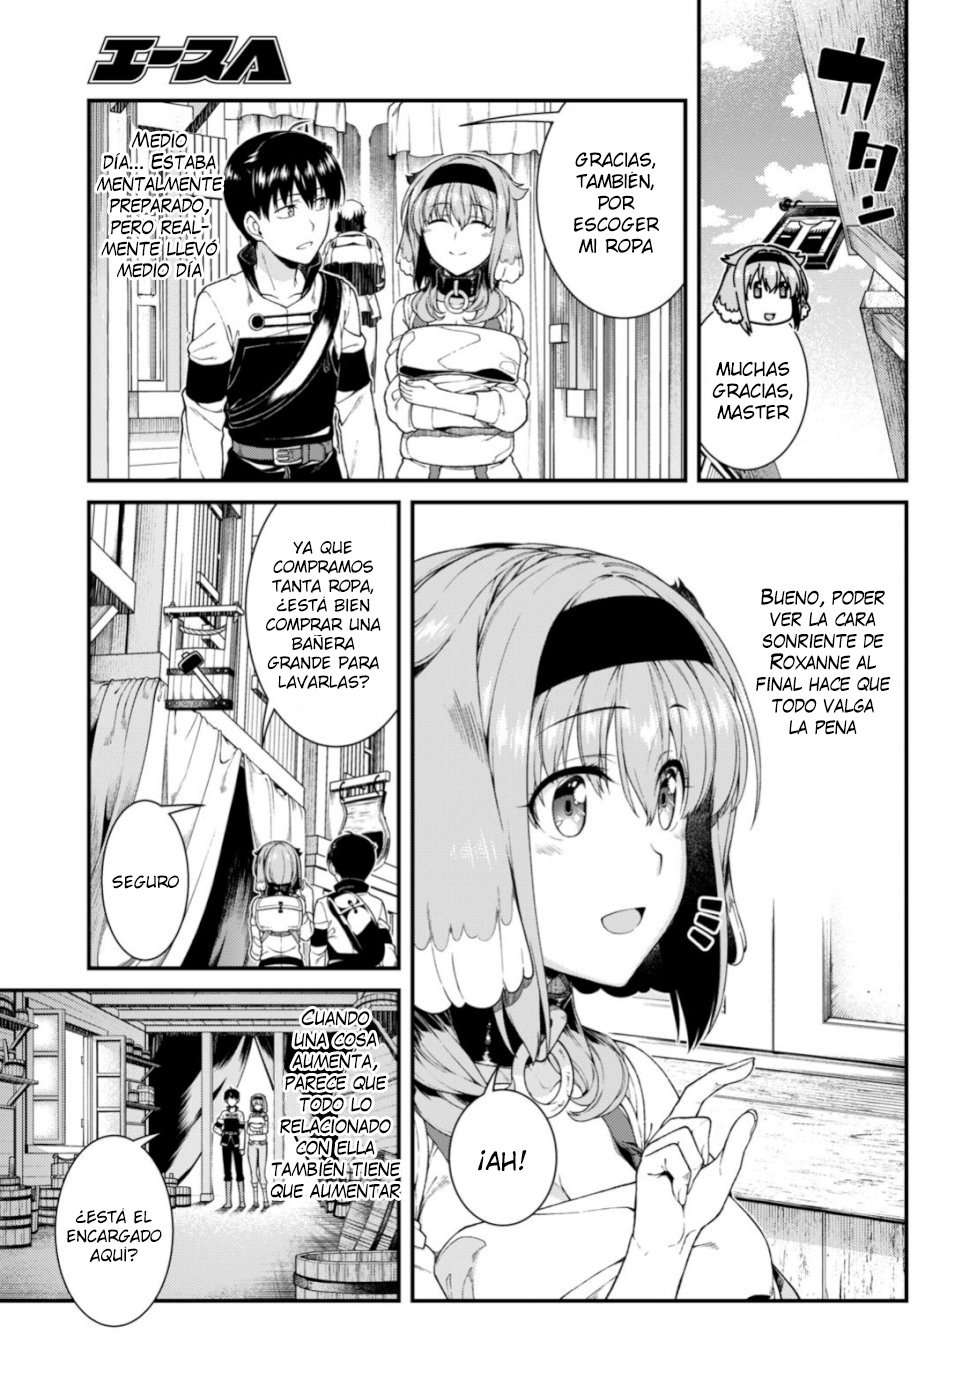 Isekai Meikyuu de Harem wo Capítulo 21.4 - Manga Online